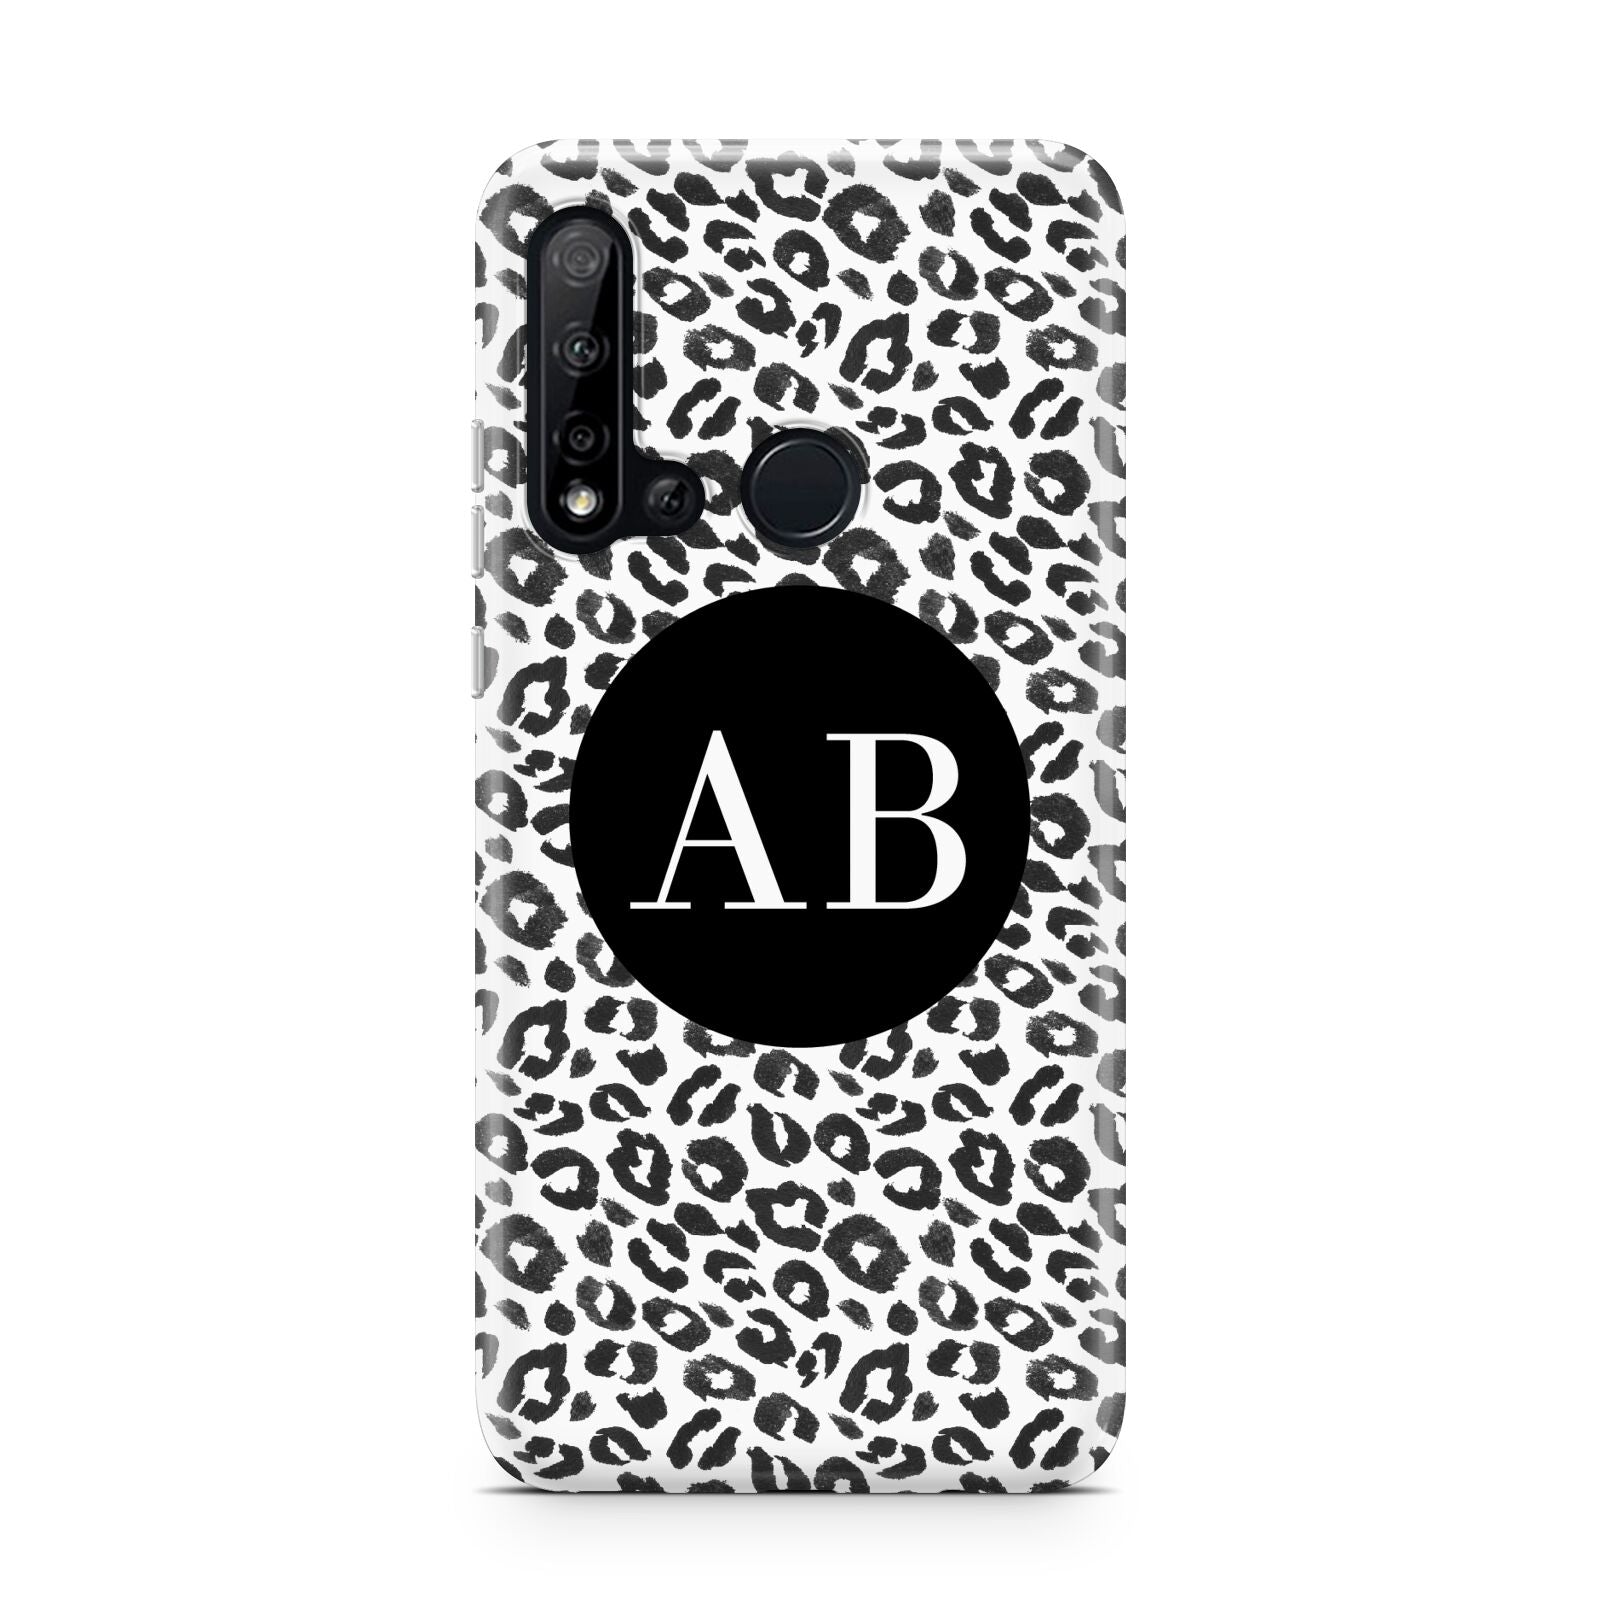 Leopard Print Black and White Huawei P20 Lite 5G Phone Case